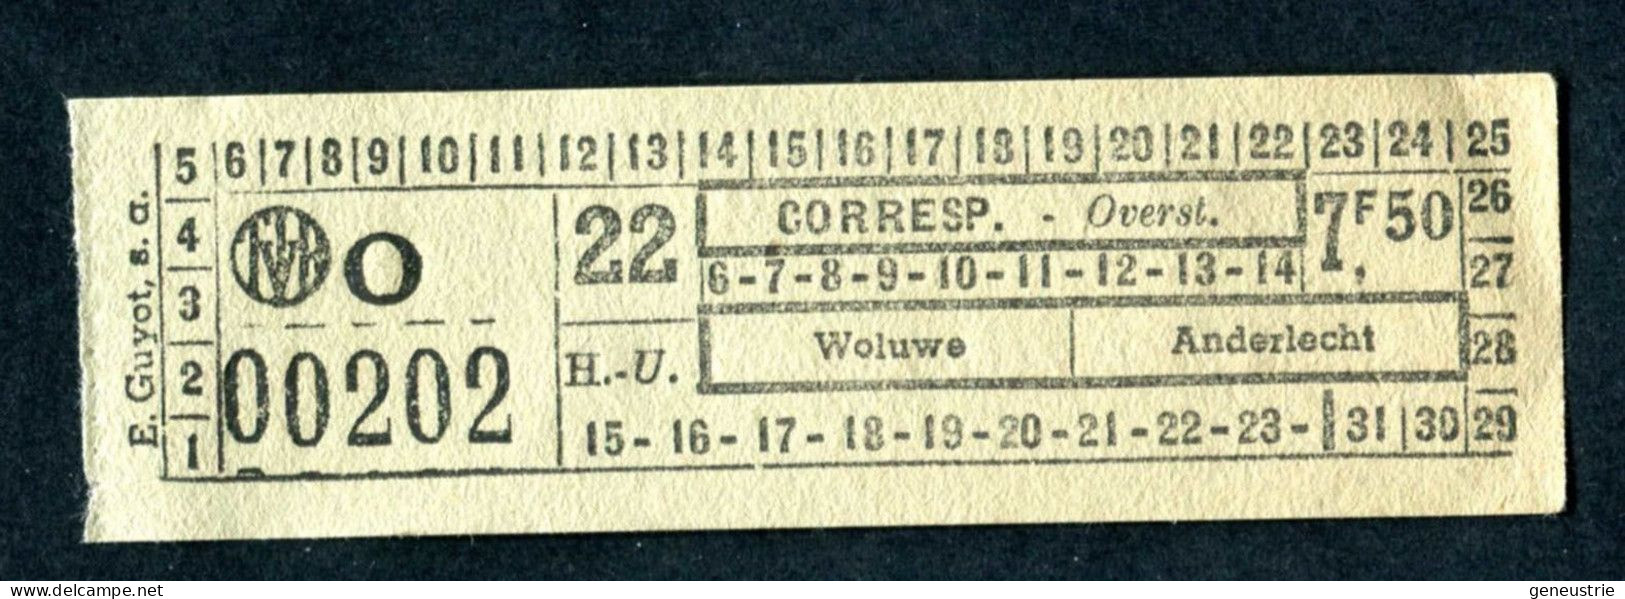 Ticket De Tramways Bruxellois Années 40/50 - Billet Tramway Bruxelles - Tram Belgique - Europa